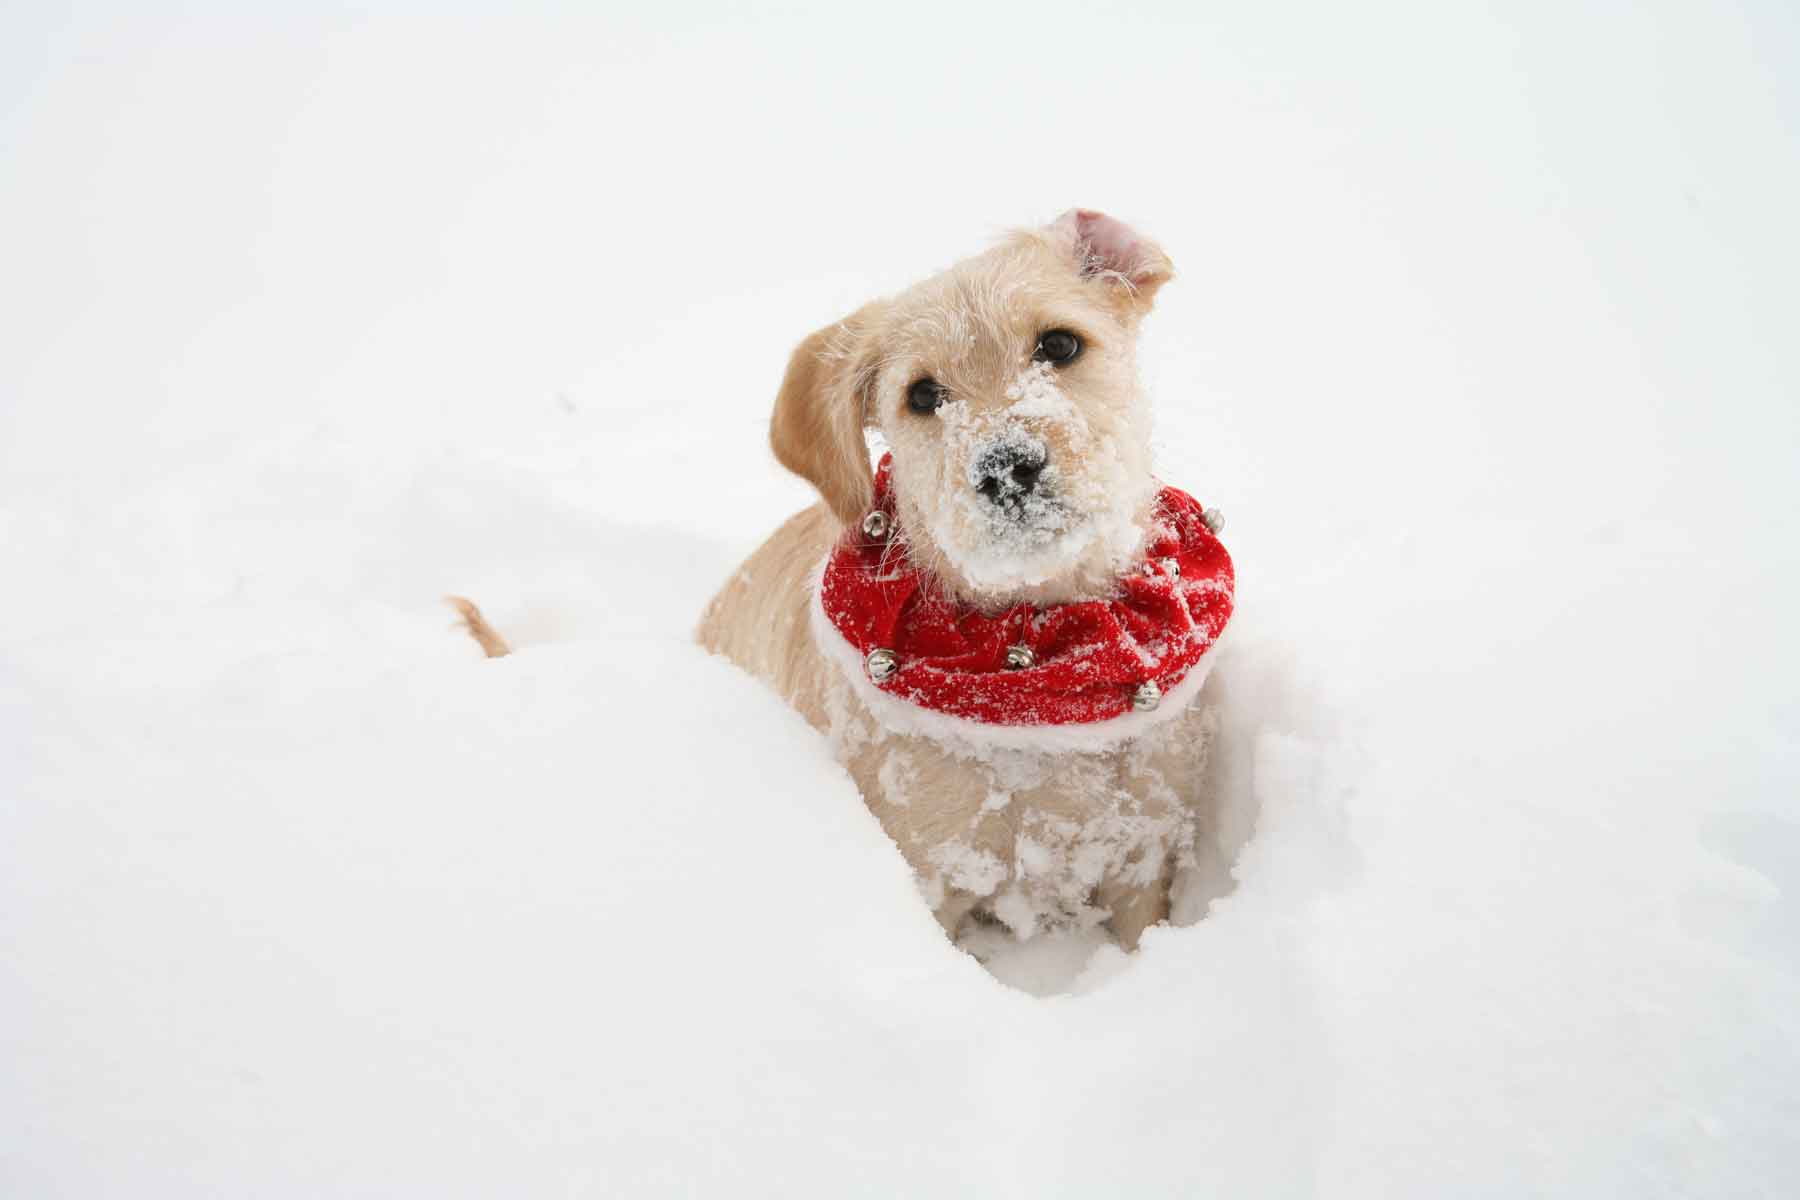 Puppy In Snow Wallpaper Puppy In Snow Computer Wallpaper Free Puppy